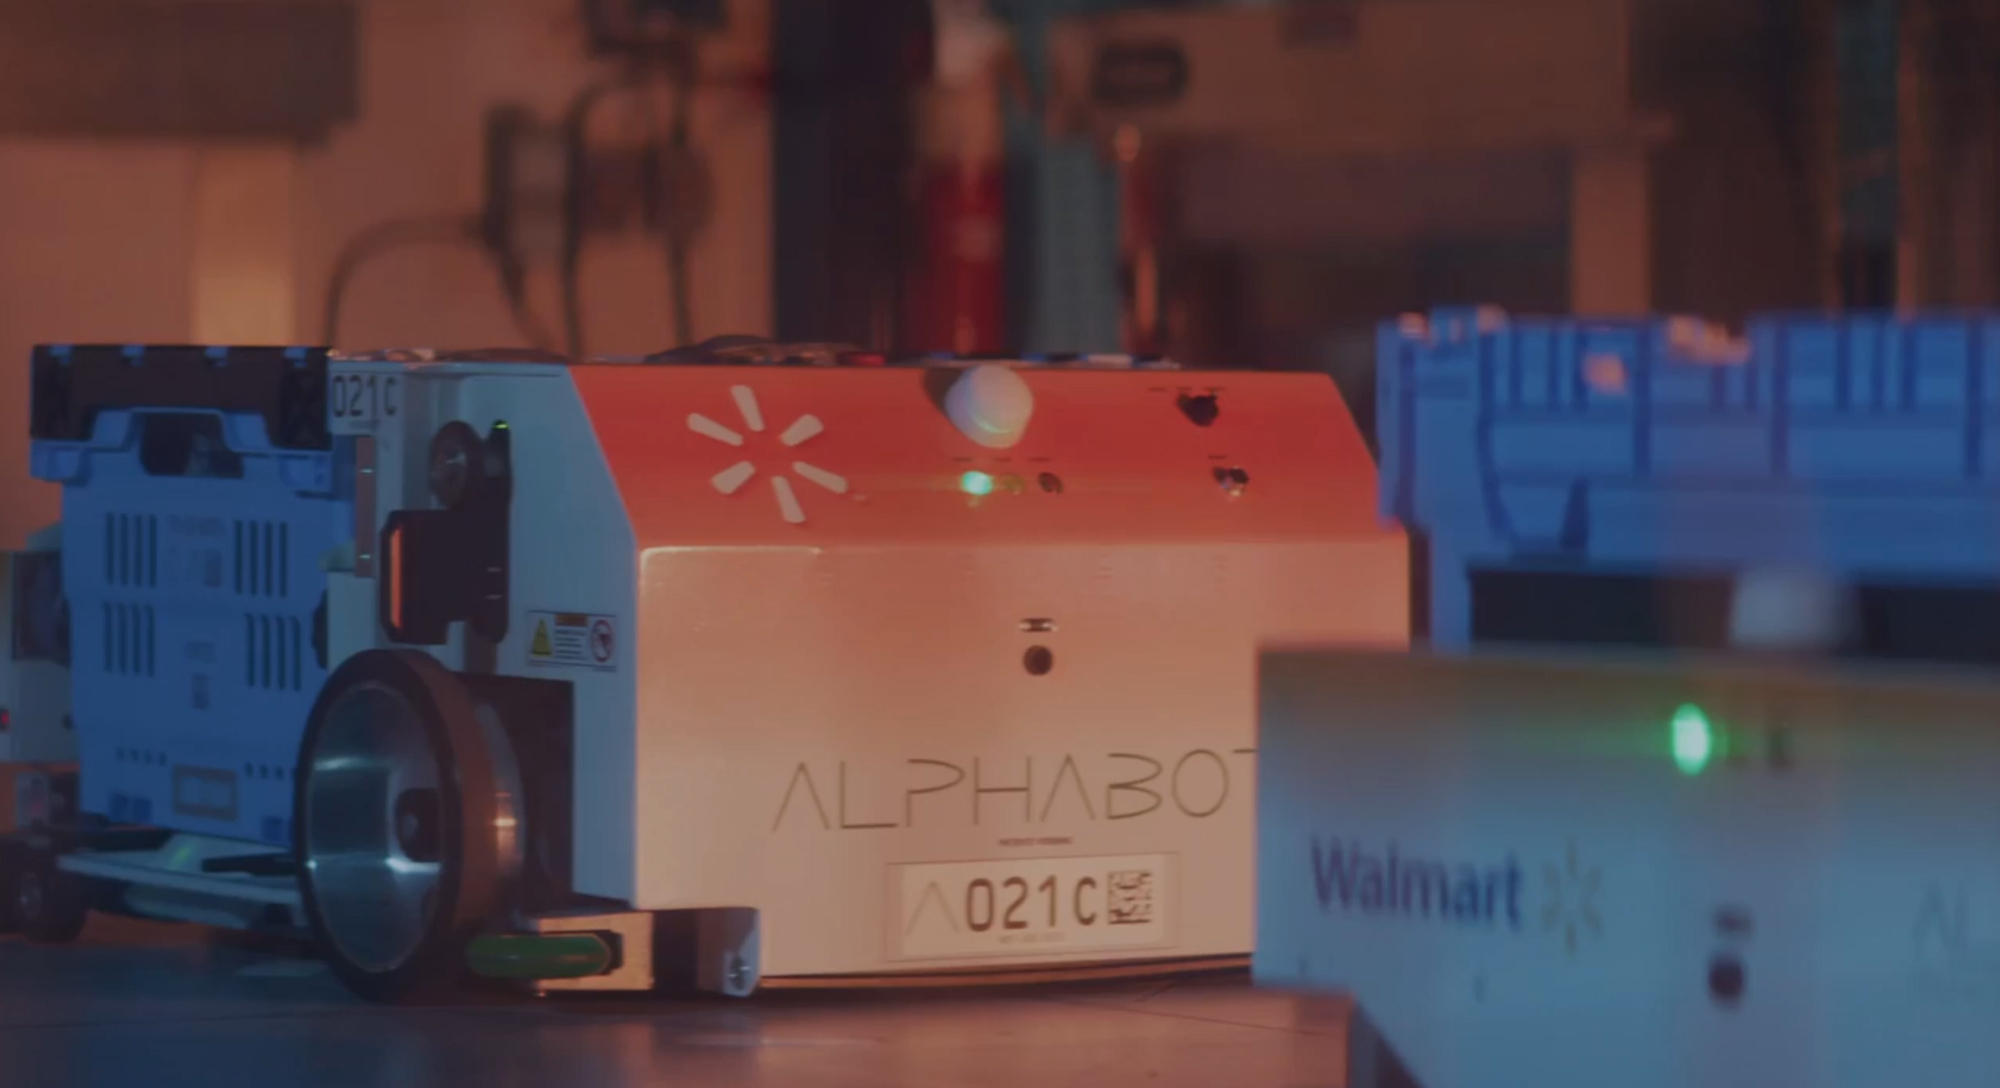 Automated bots retrieve the items inside the Walmart market fulfillment center.